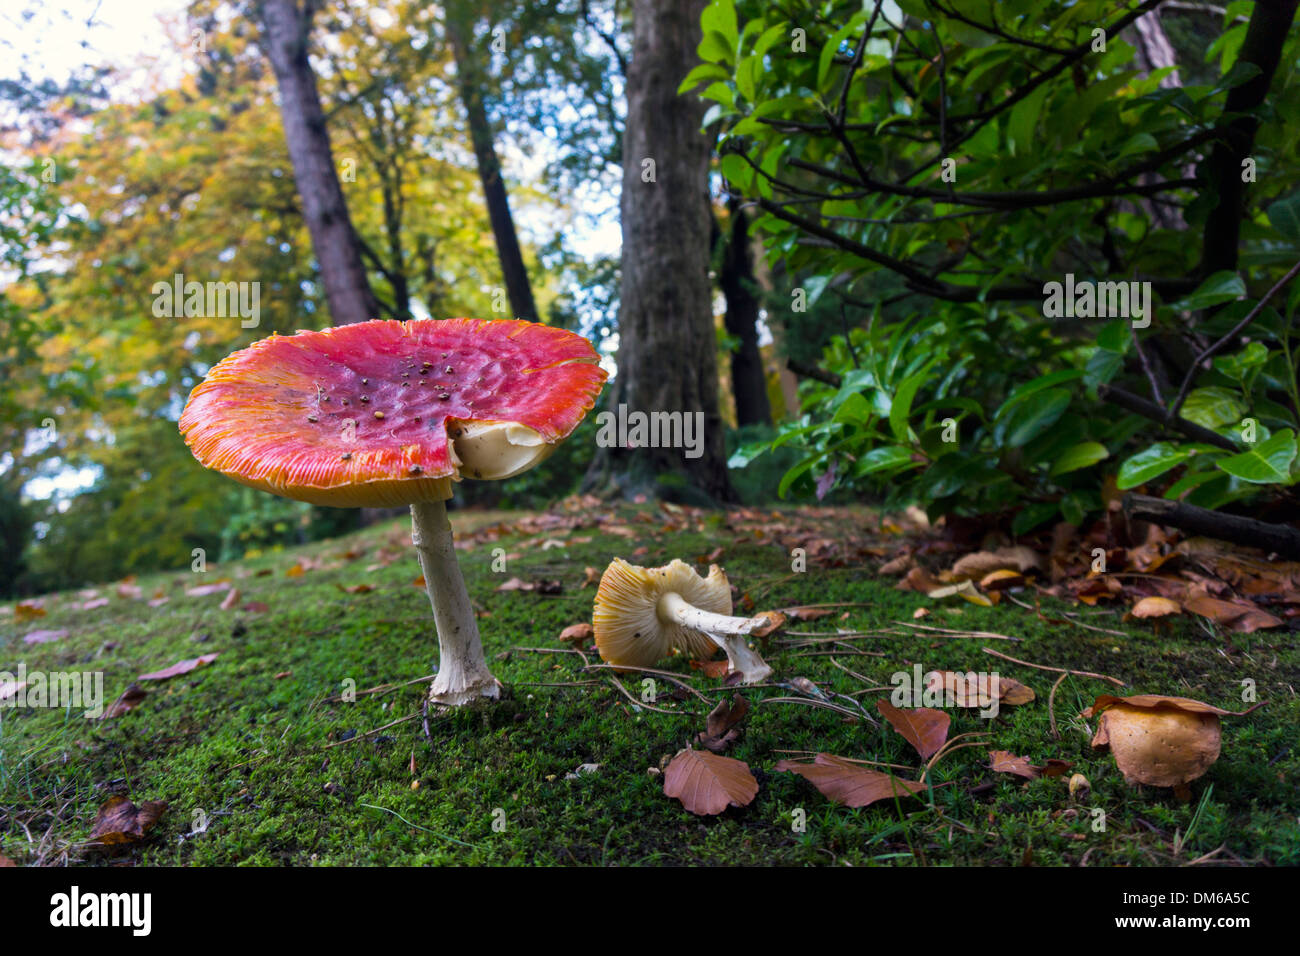 Amanita muscaria, Fly Agaric mushroom red and white fungi, toadstool in autumn setting, Stock Photo